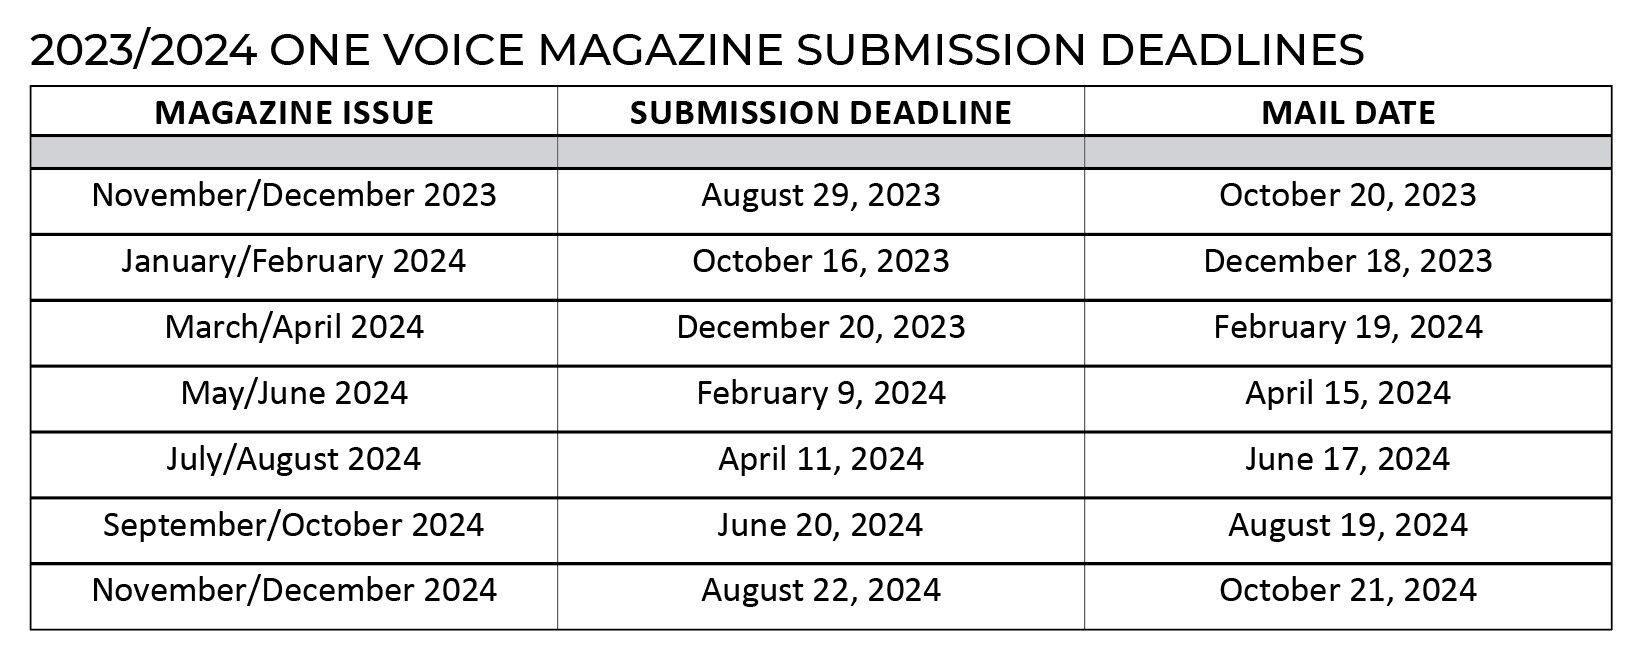 2023/2024 One Voice Magazine Submission Deadline